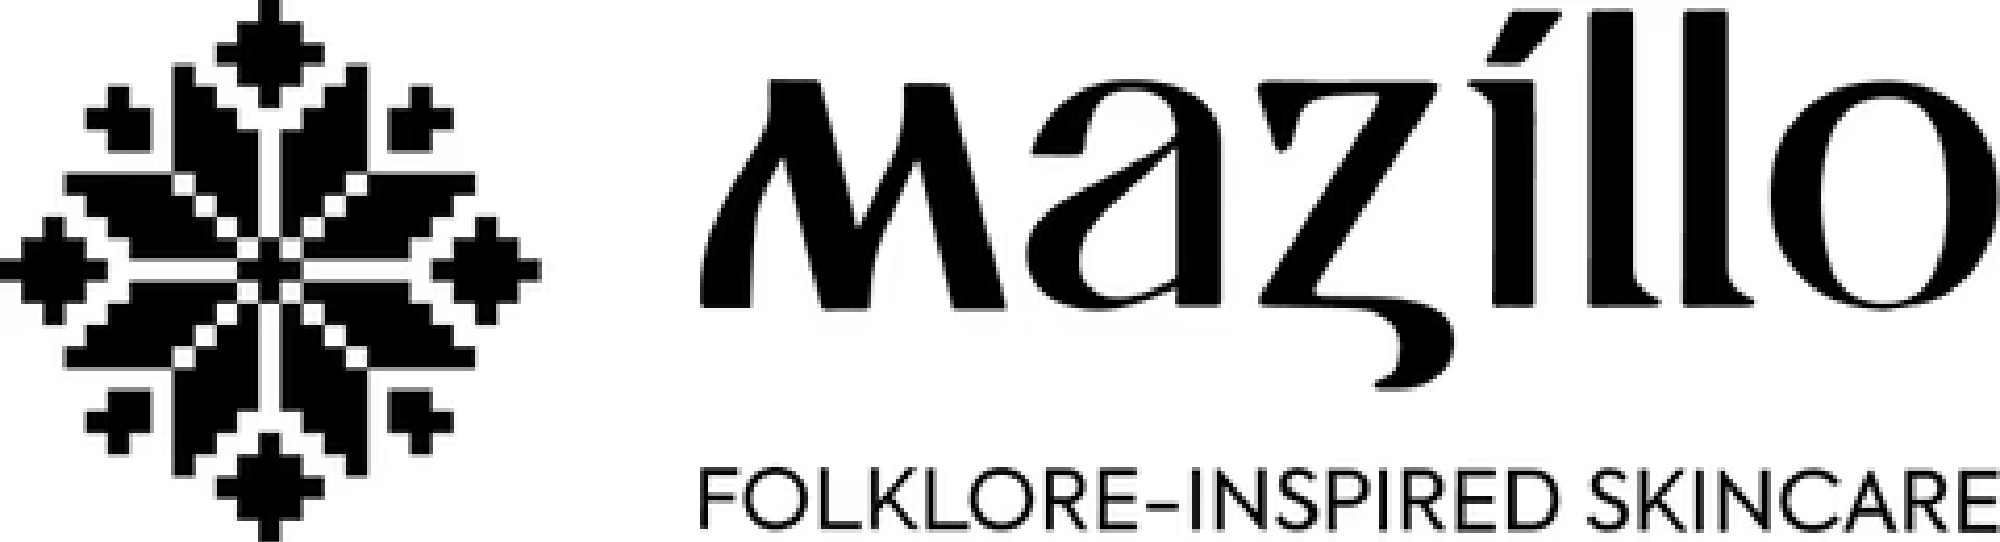 mazilo logo